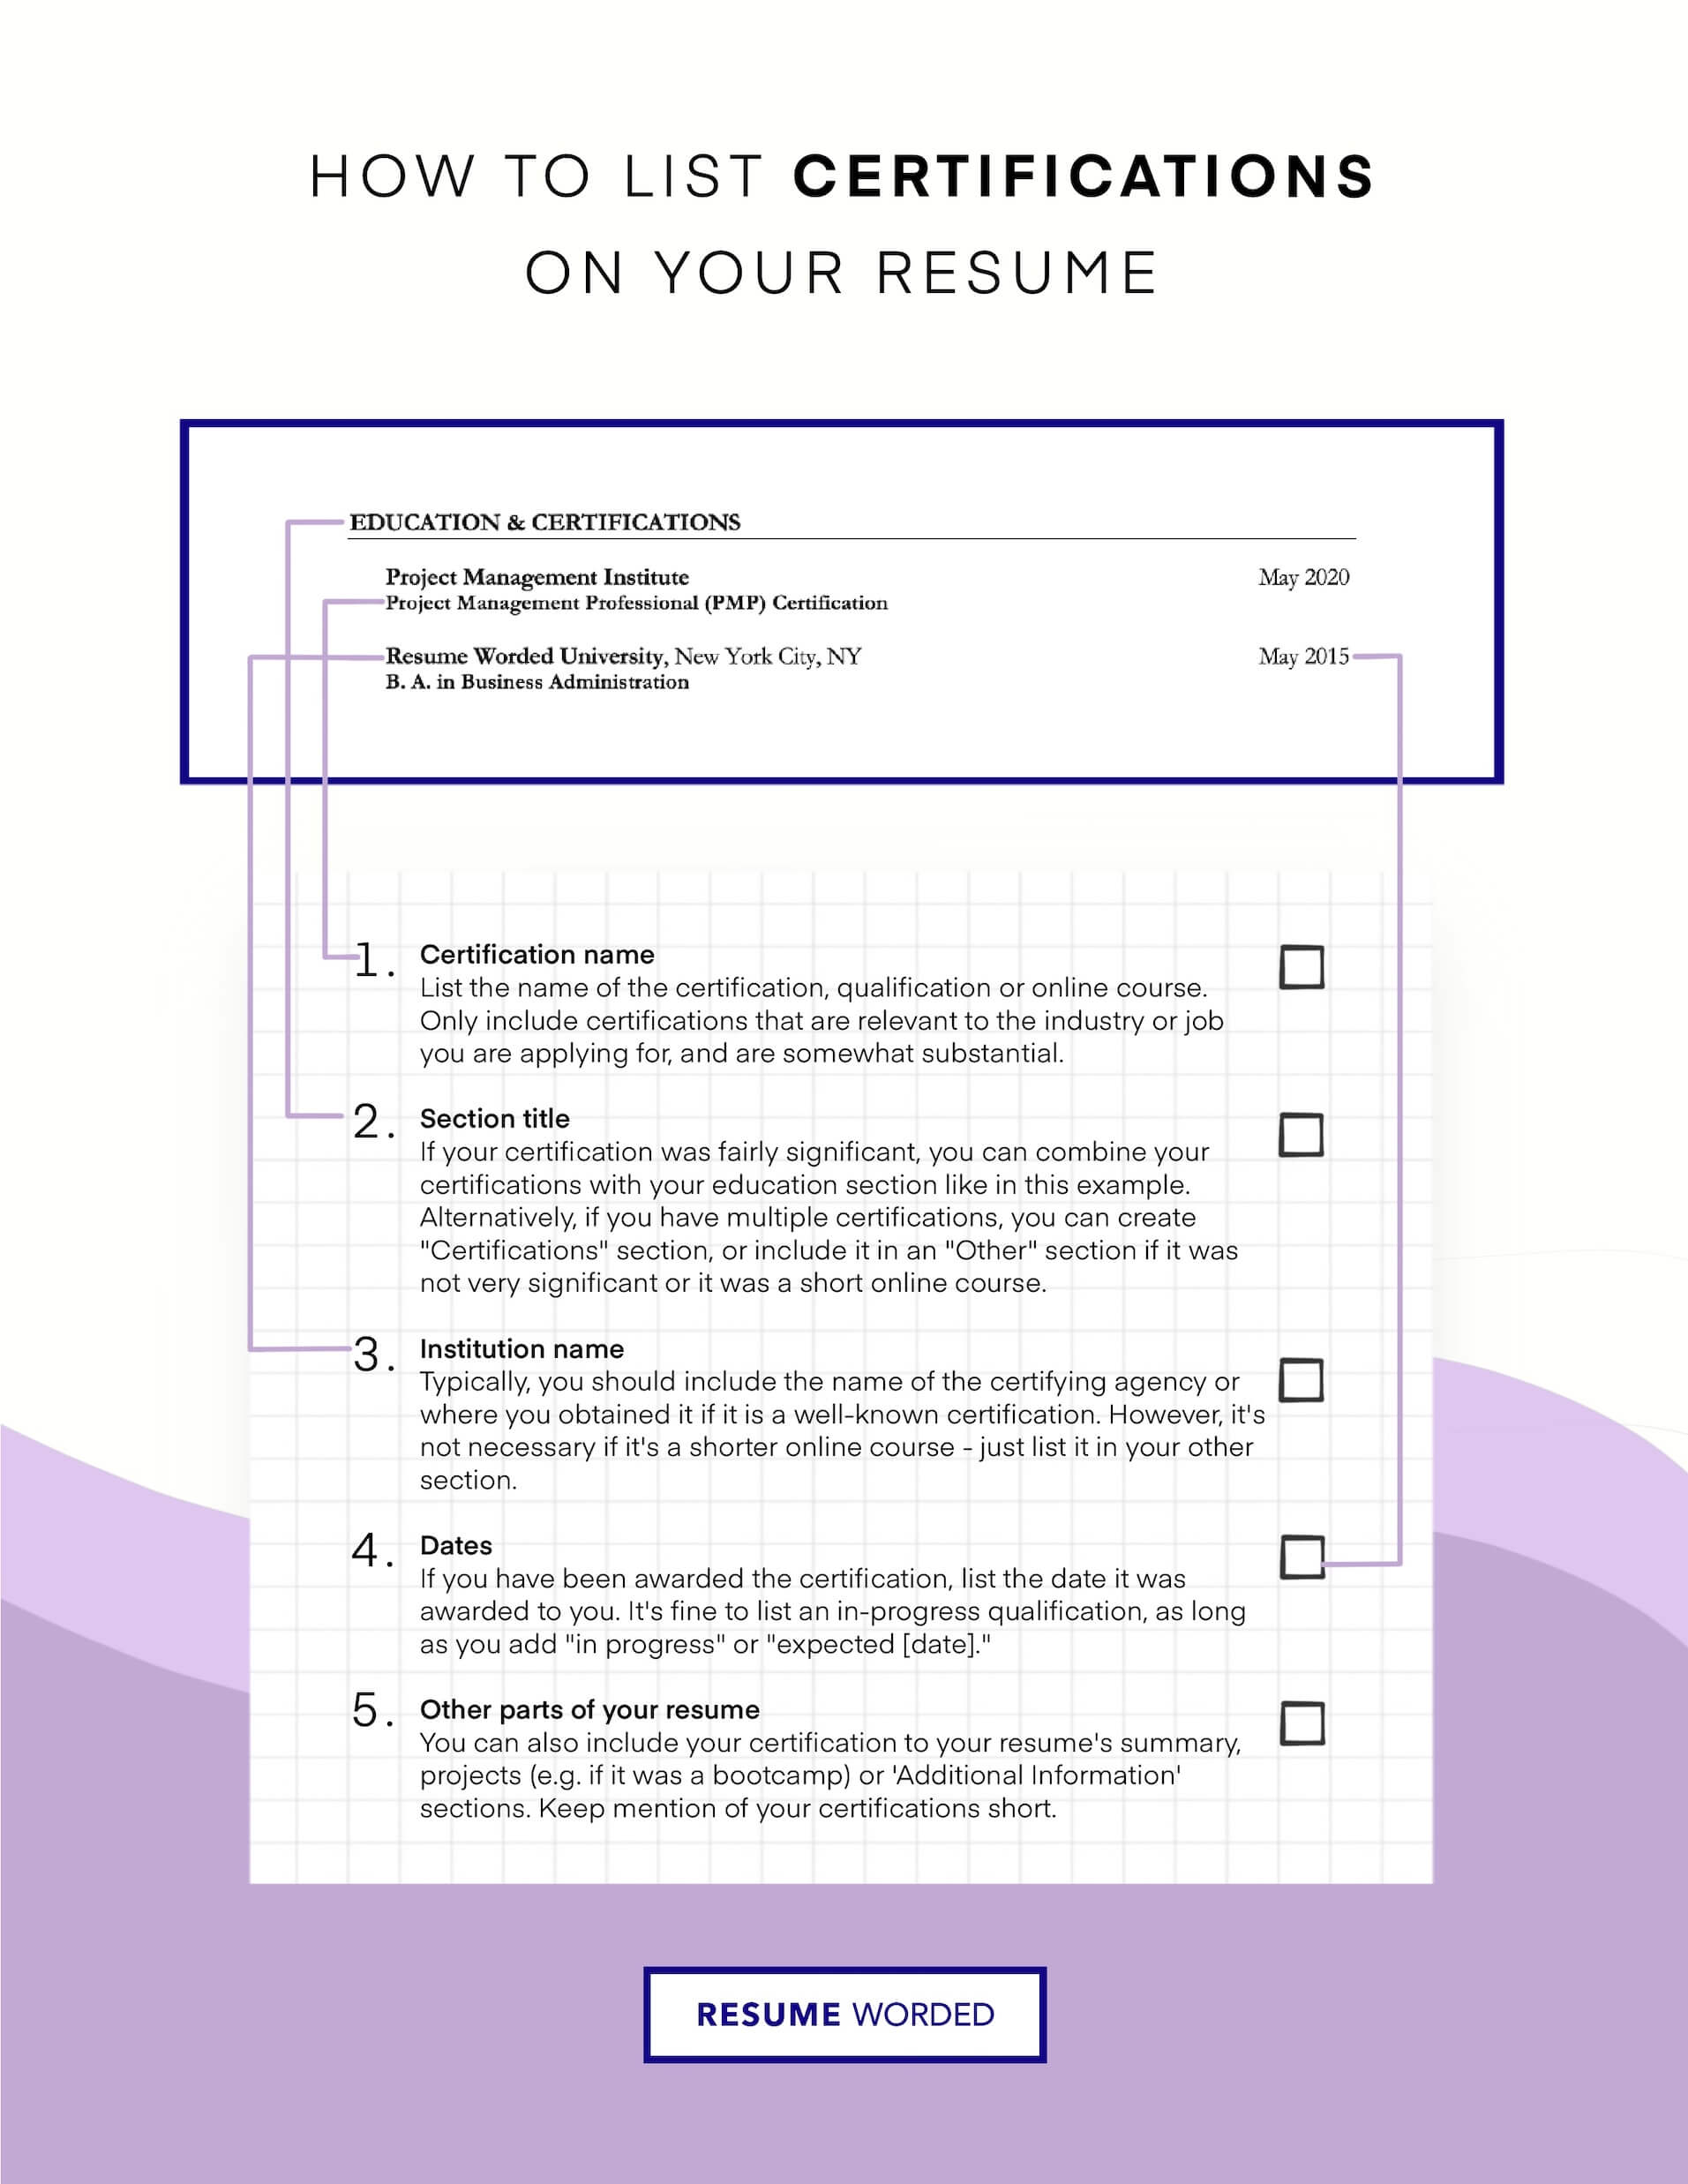 Gain HR certification. - Human Resources Specialist Resume